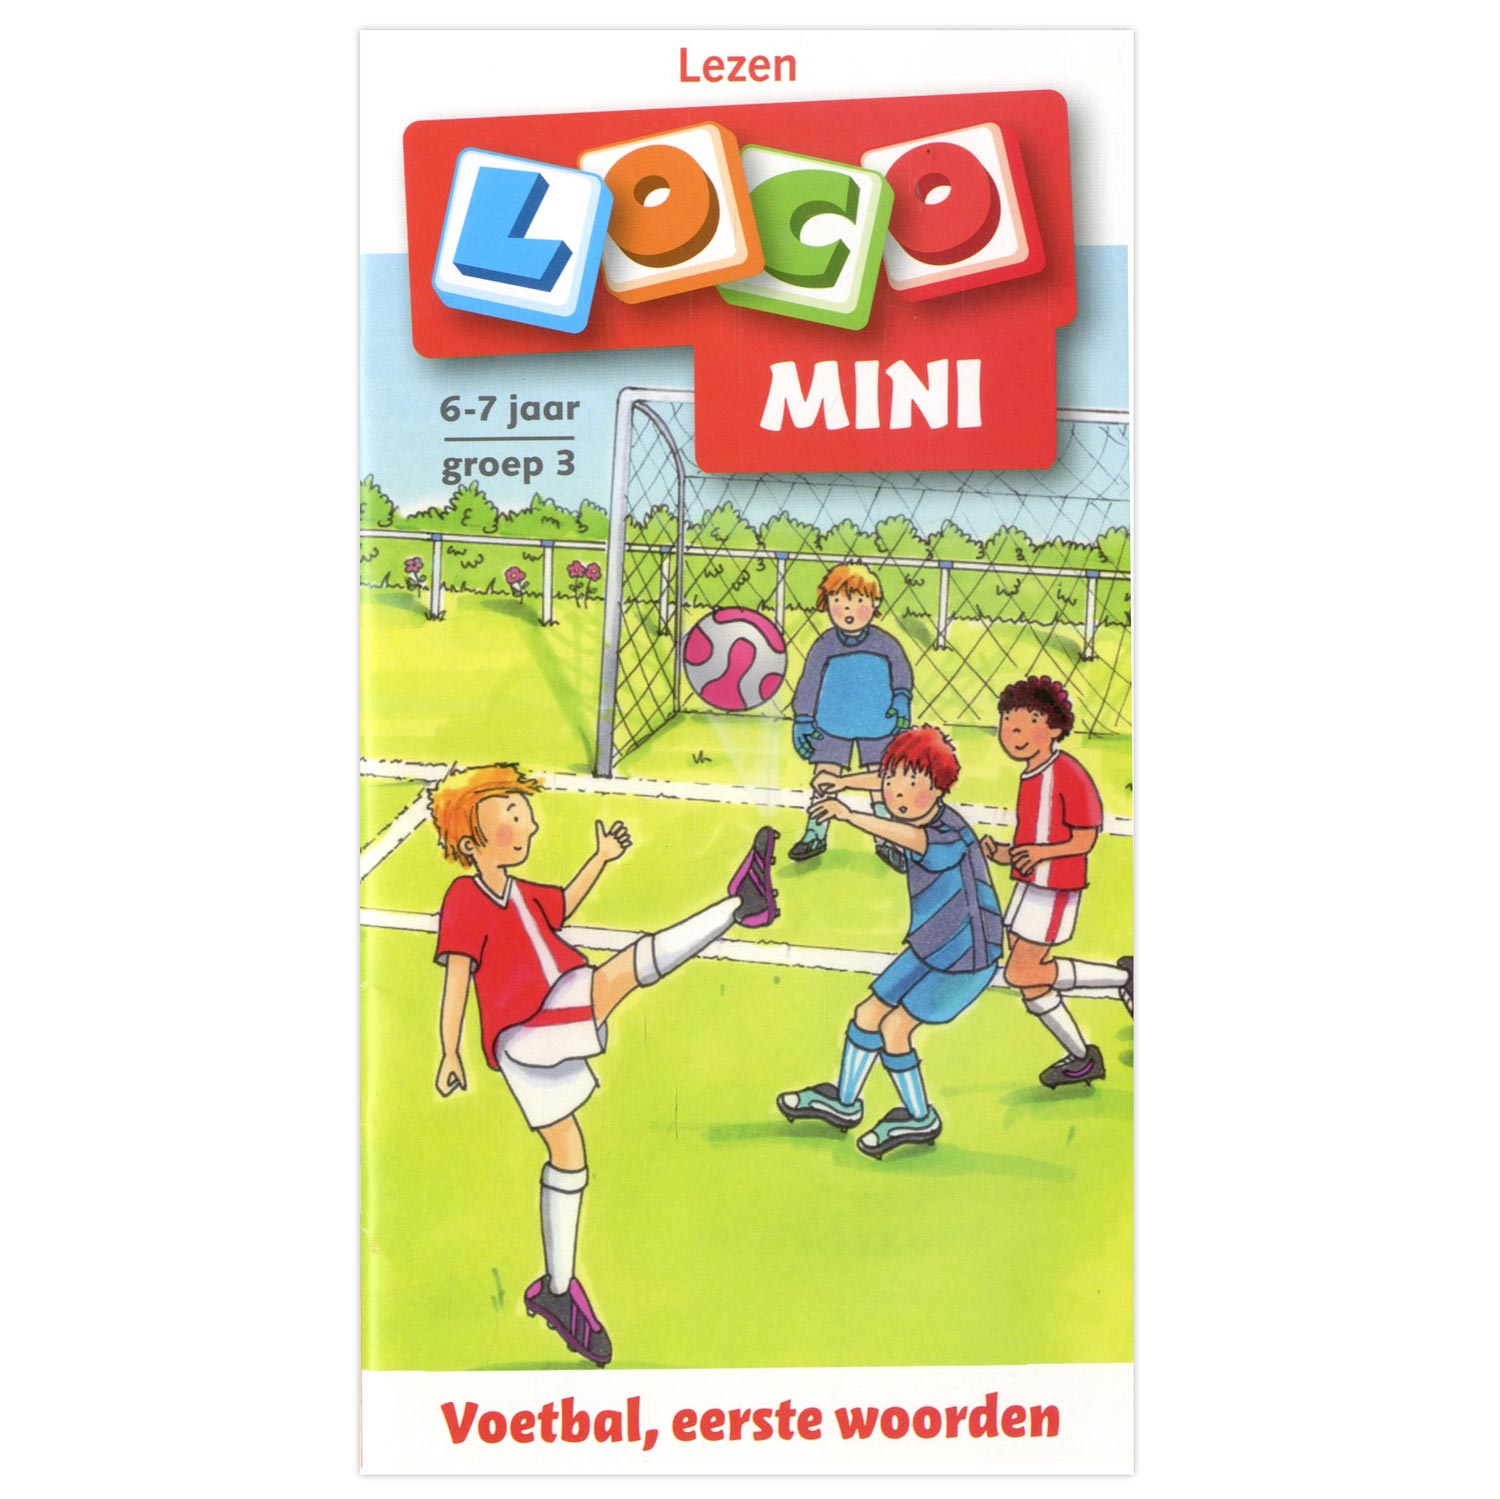 Mini Loco - Voetbal